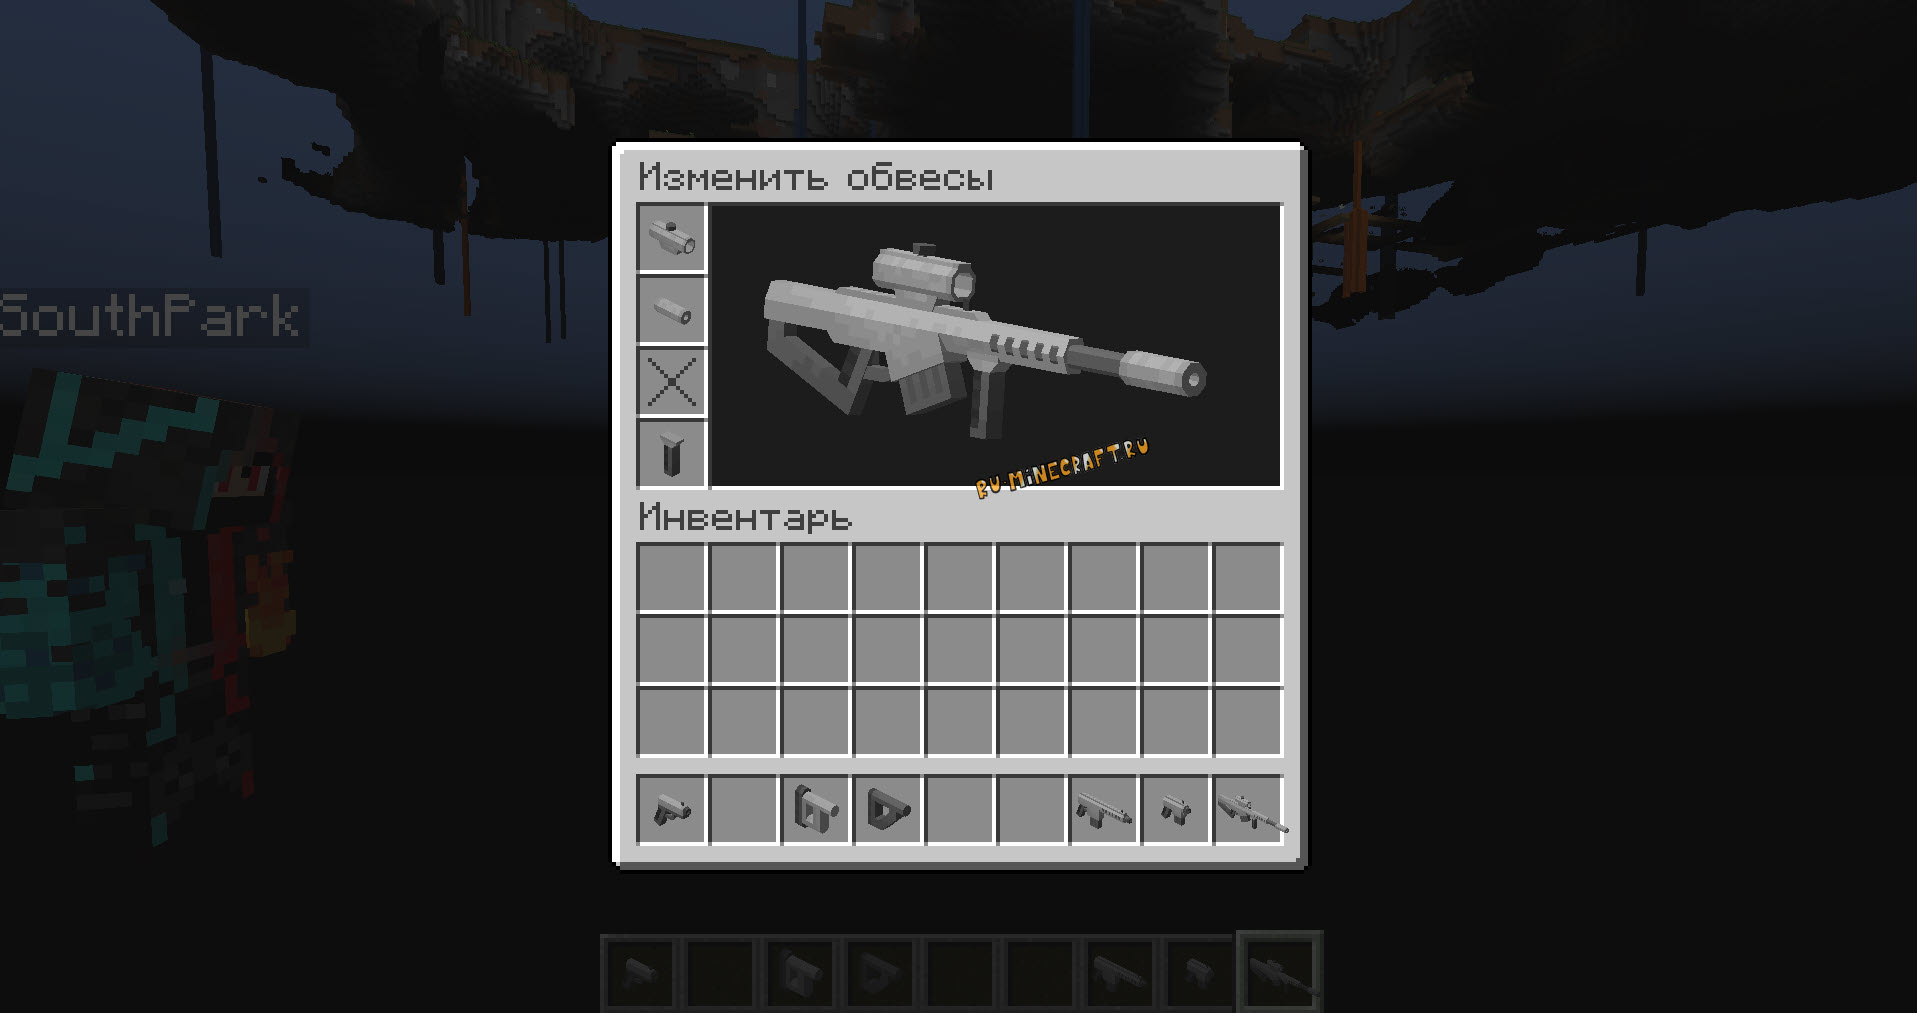 Майнкрафт mrcrayfish s gun mod